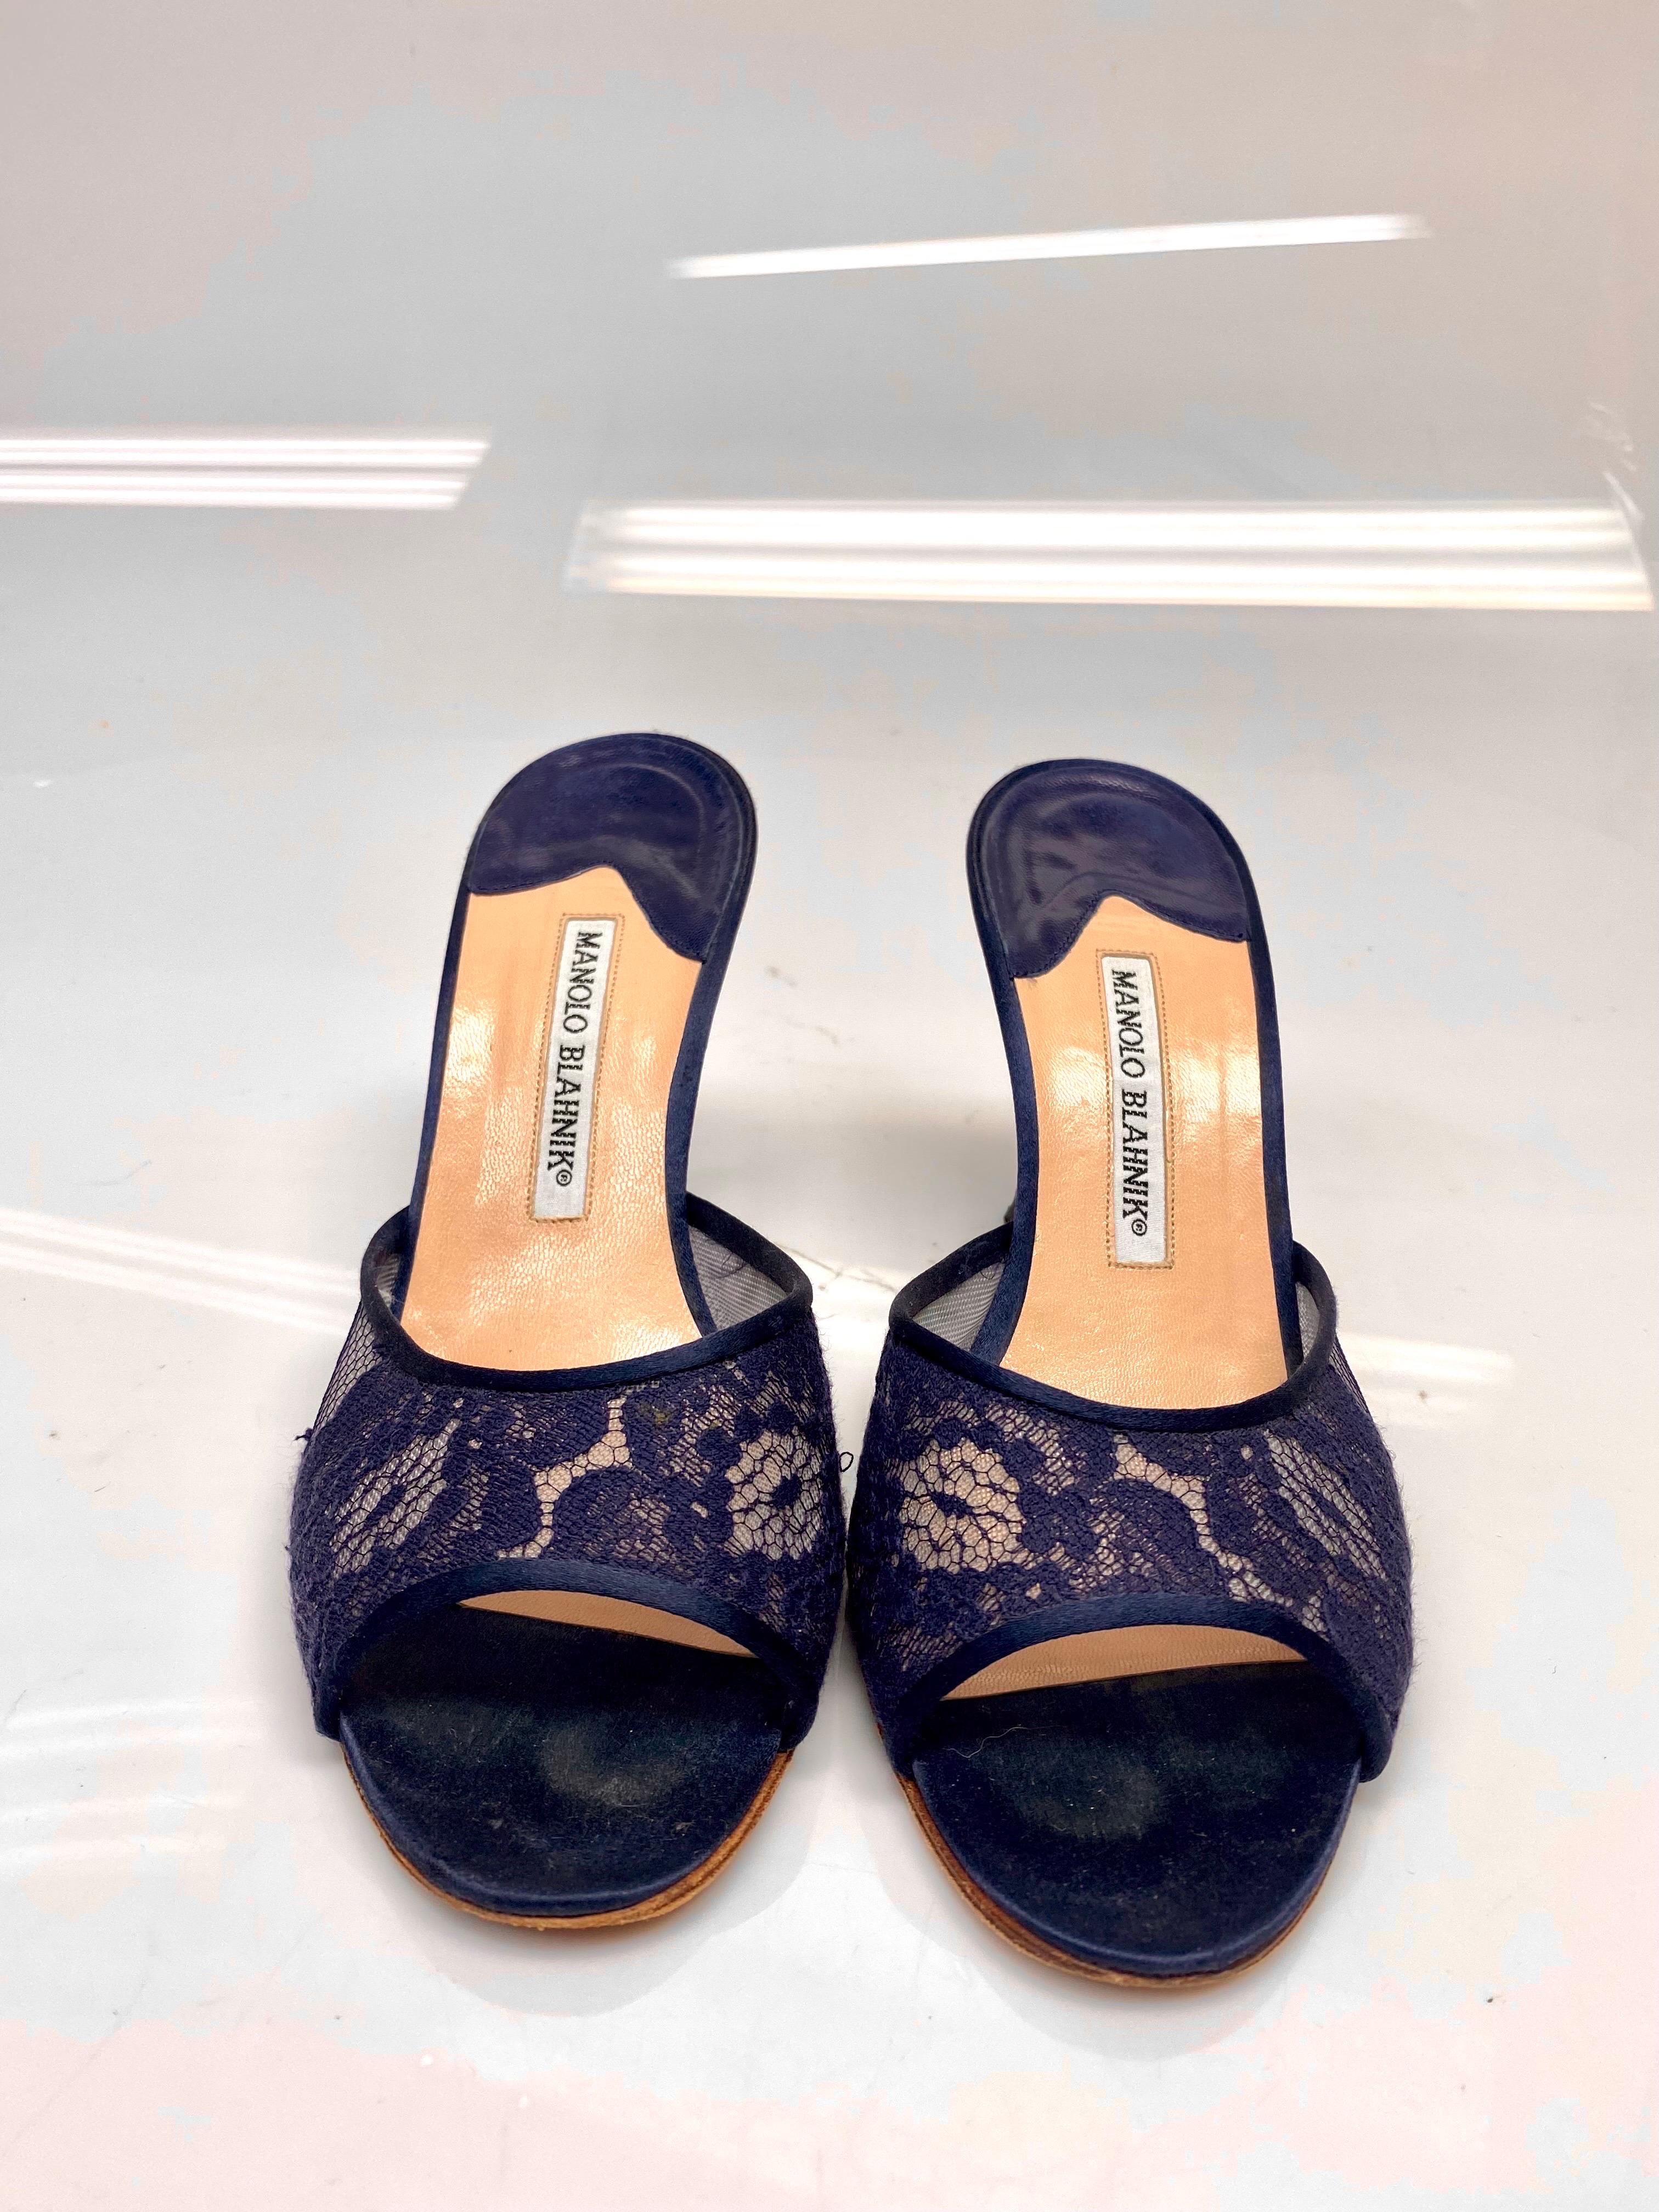 Manolo Blahnik Navy Lace Open Toe Heels Size 38.5 In Good Condition For Sale In West Palm Beach, FL